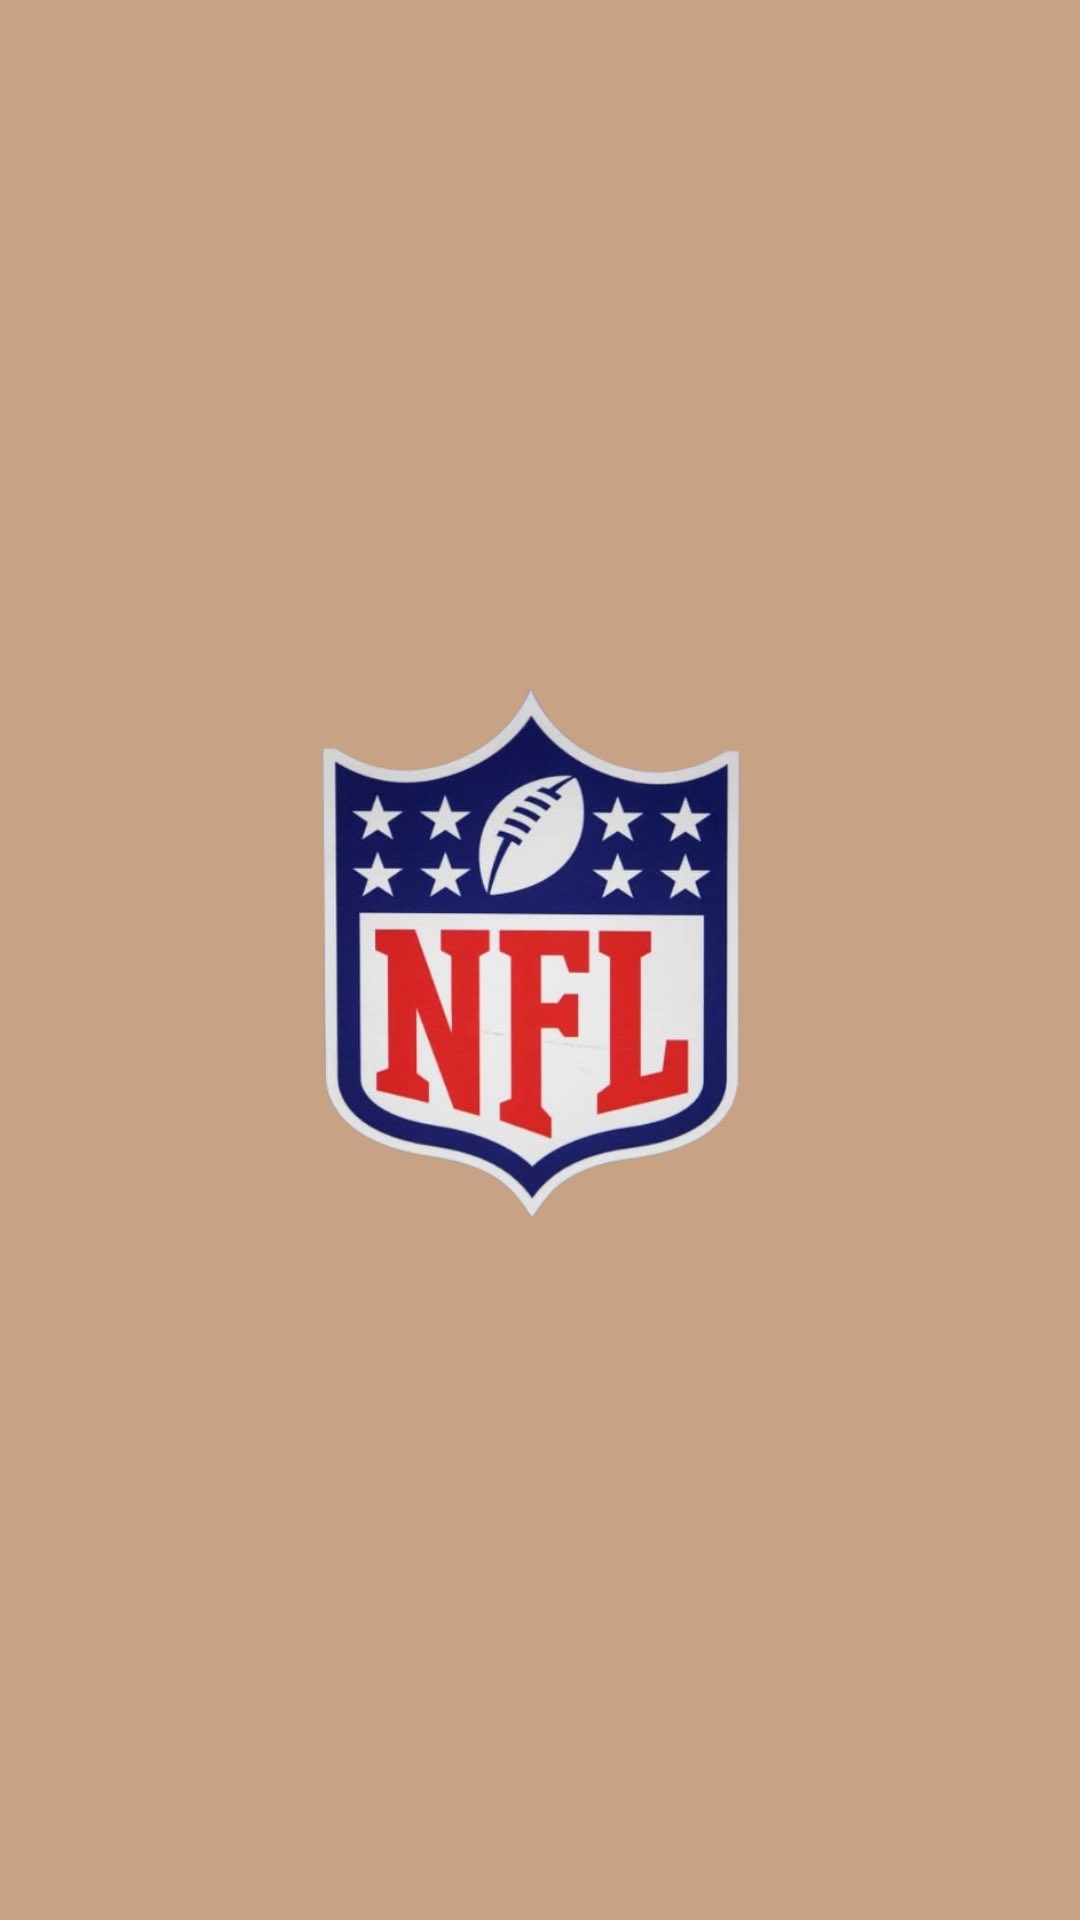 NFL Logo Wallpapers - Top 20 Best NFL Logo Wallpapers [ HQ ]